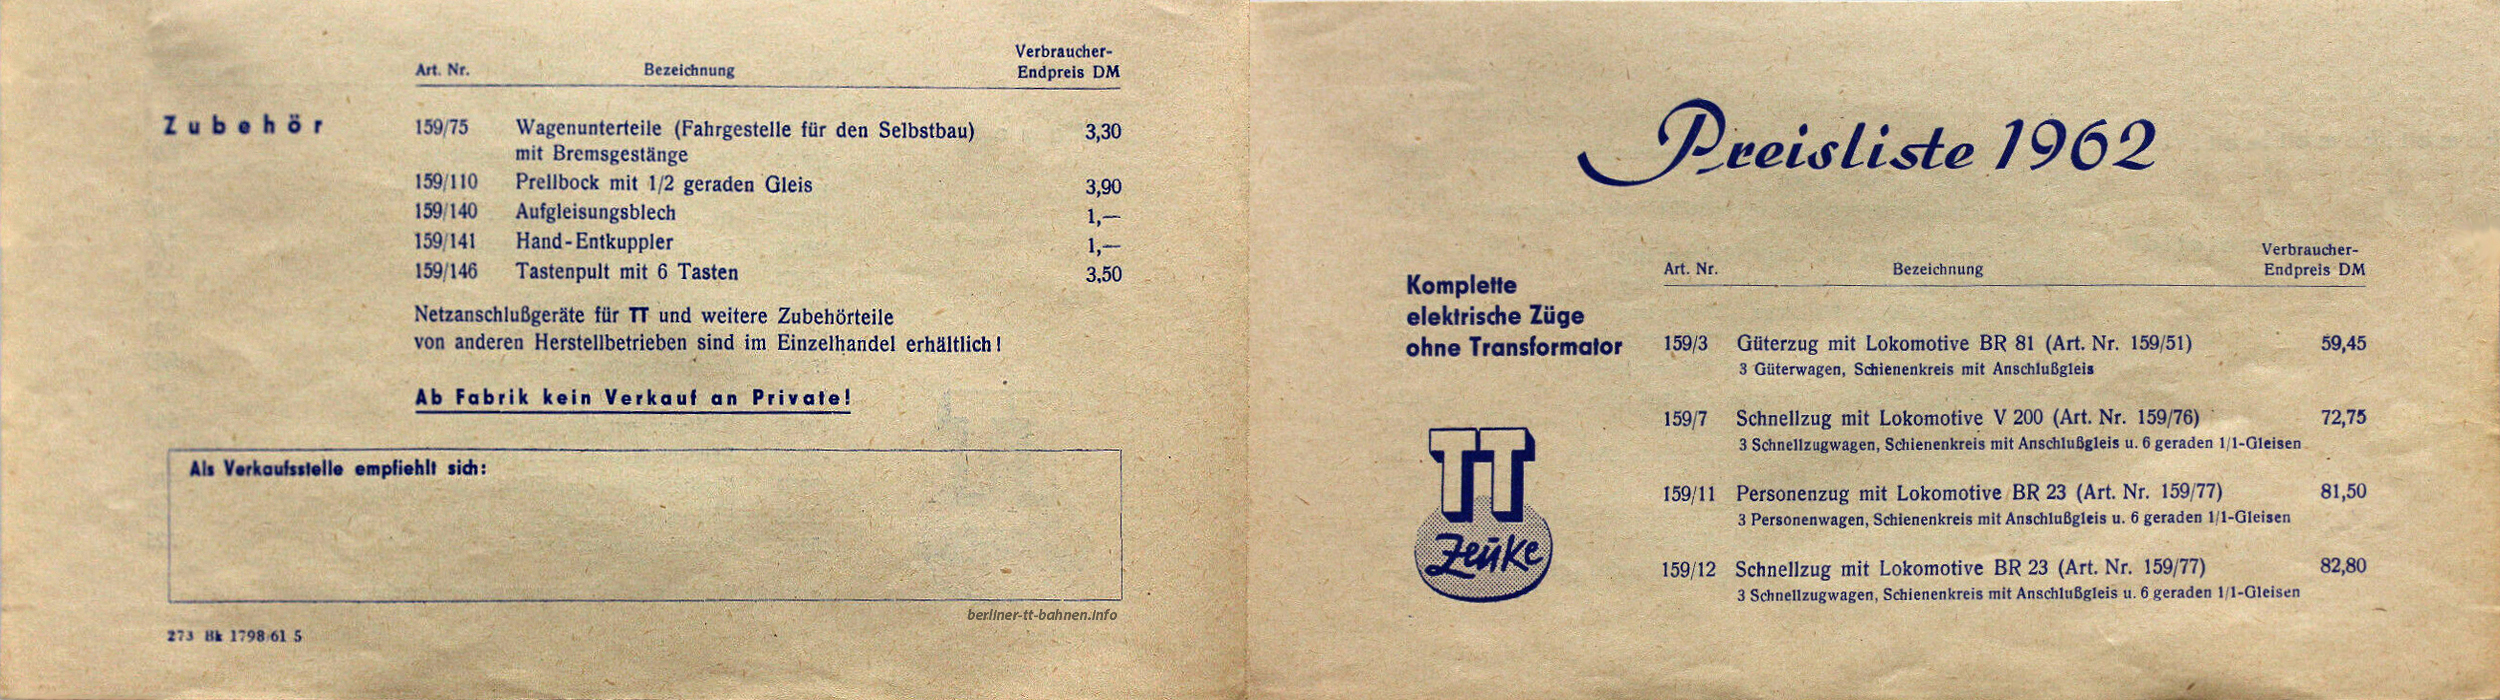 Preisliste zum Katalog 1962 - Vorder-/ Rückseite